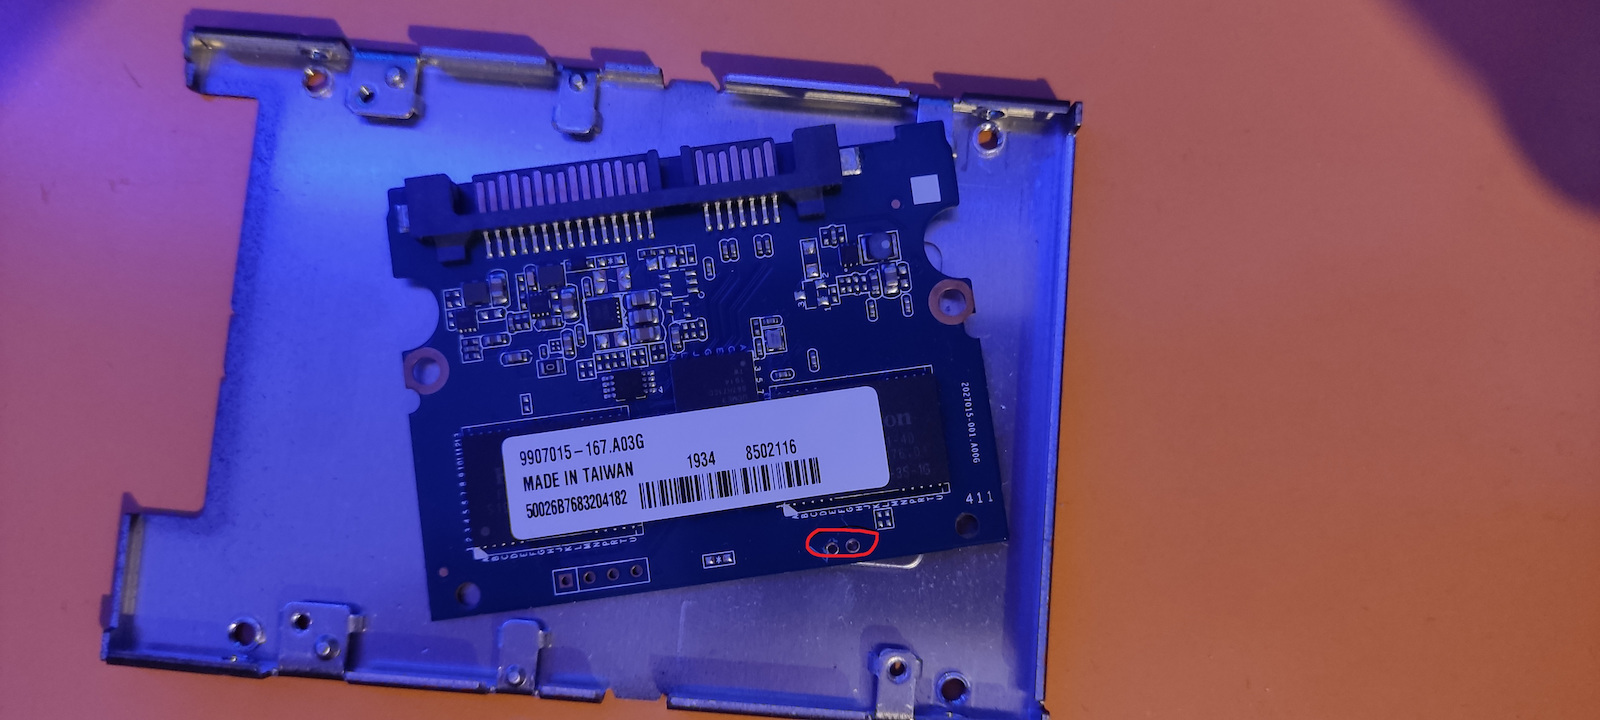 Kingston 240GB SSD disassembly 